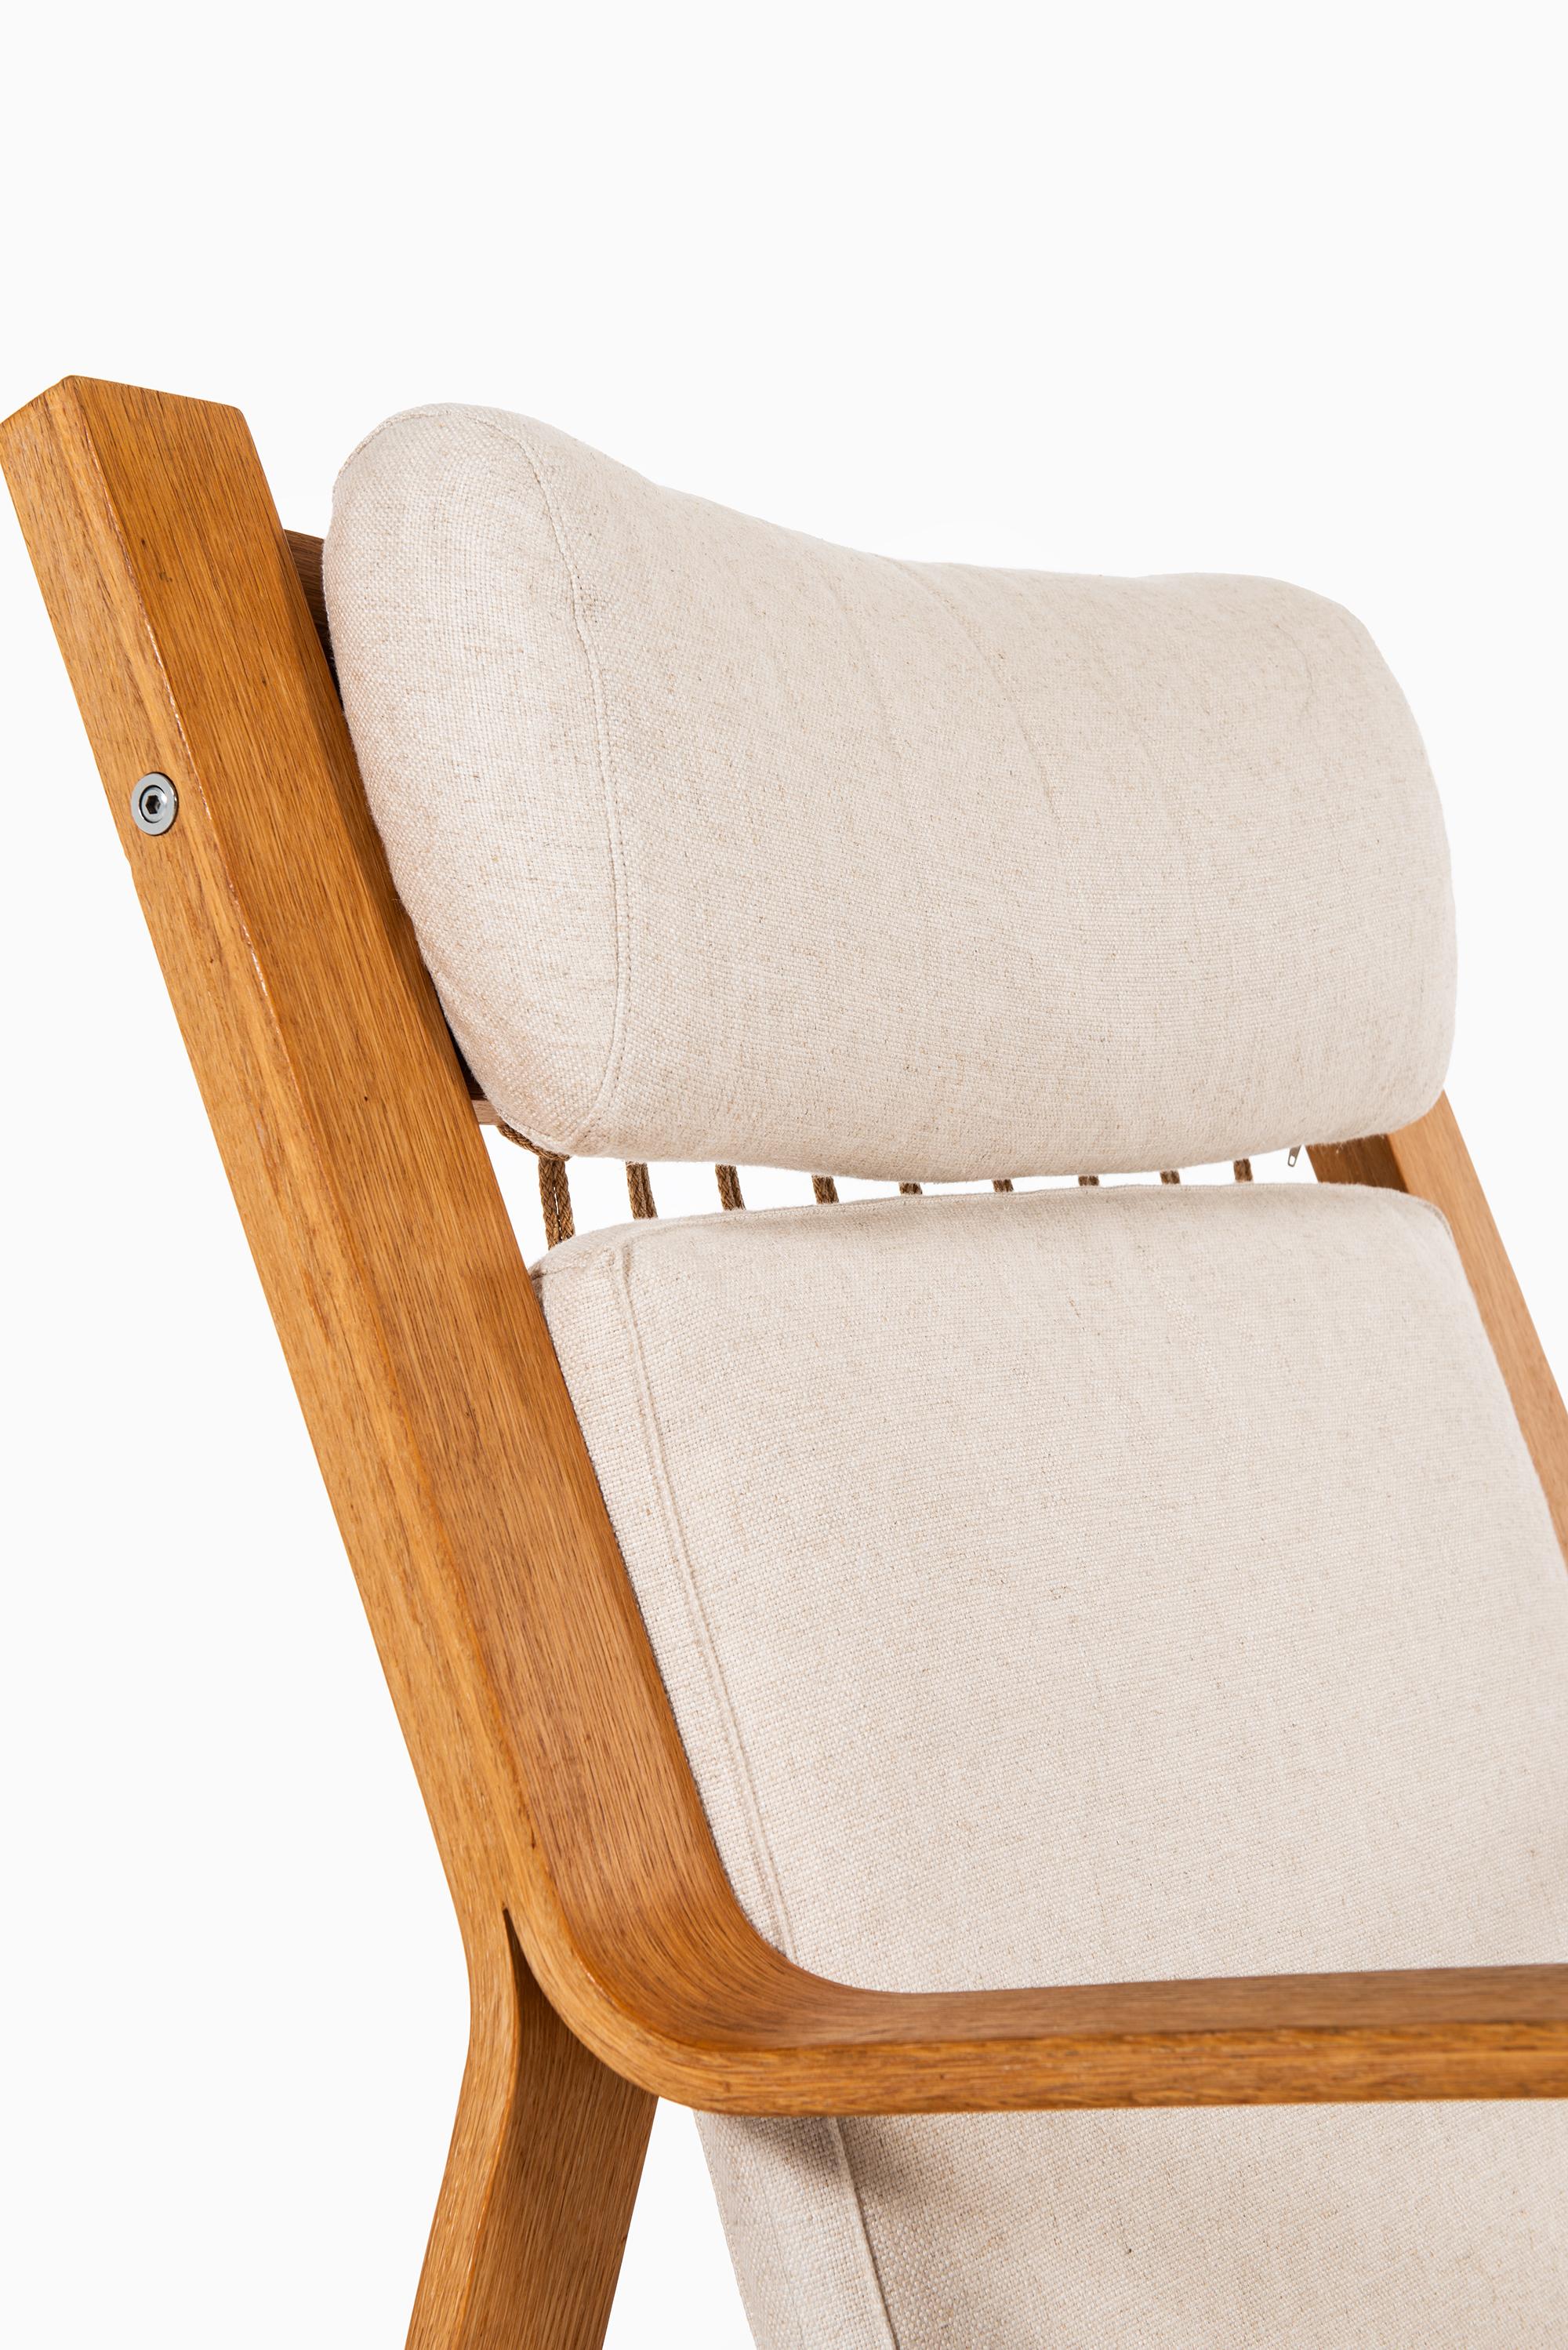 Mid-20th Century Hans Wegner Easy Chairs Model GE-671 Produced by GETAMA in Denmark